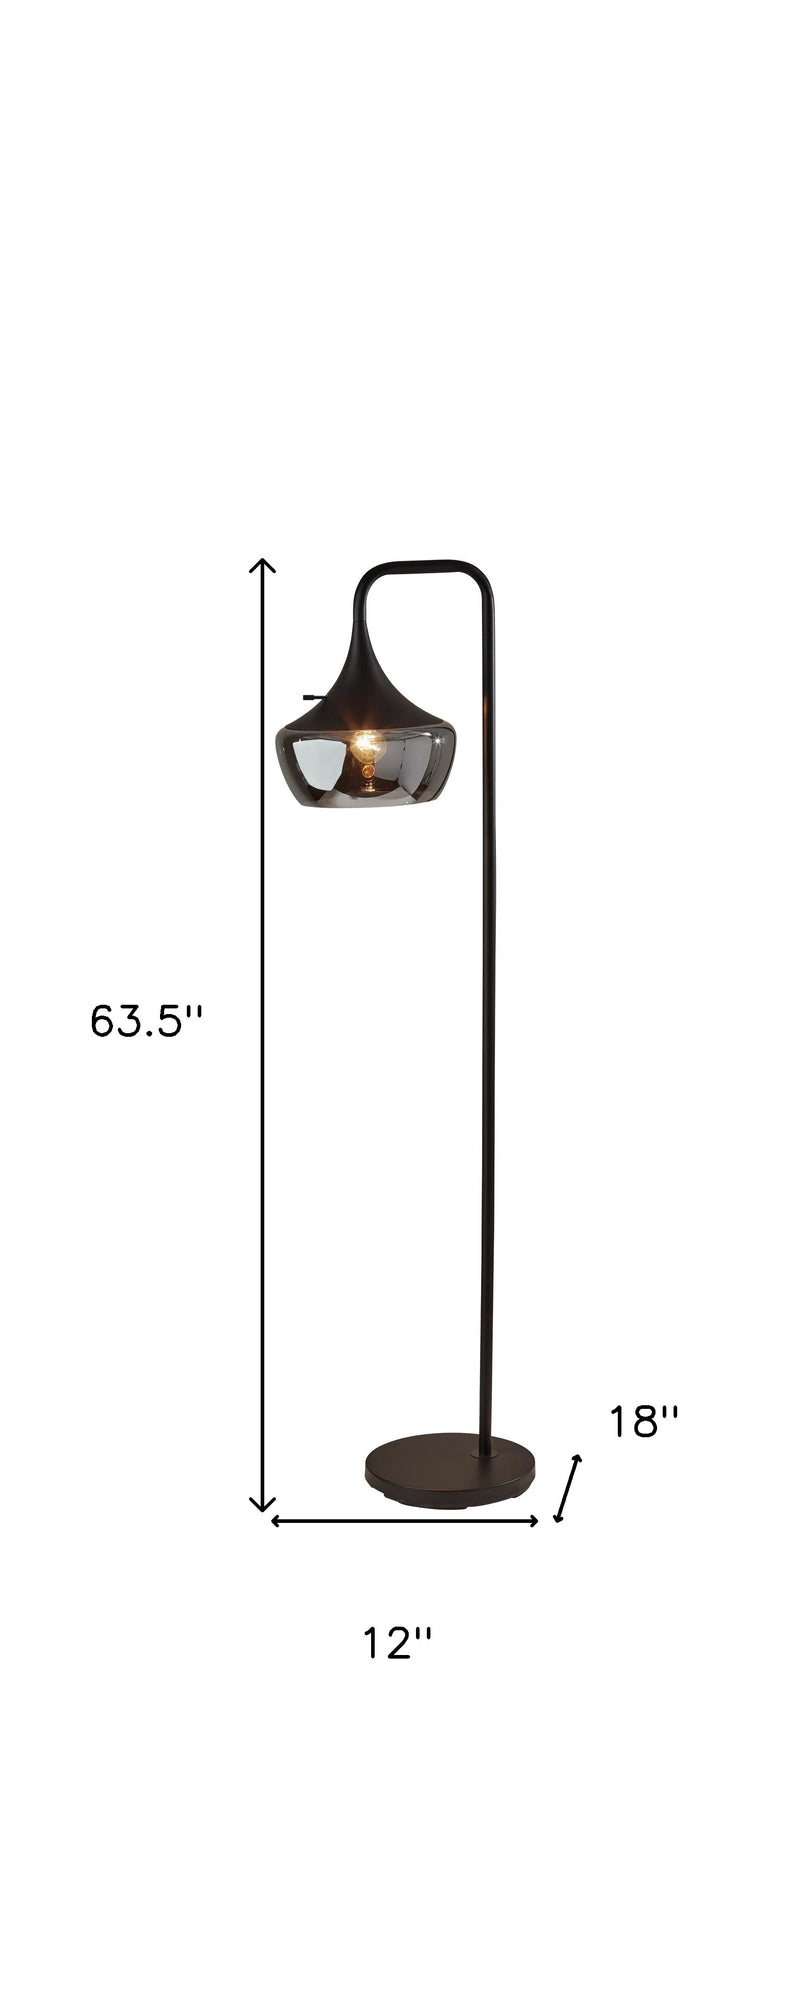 64" Black Task Floor Lamp With Black Bowl Shade